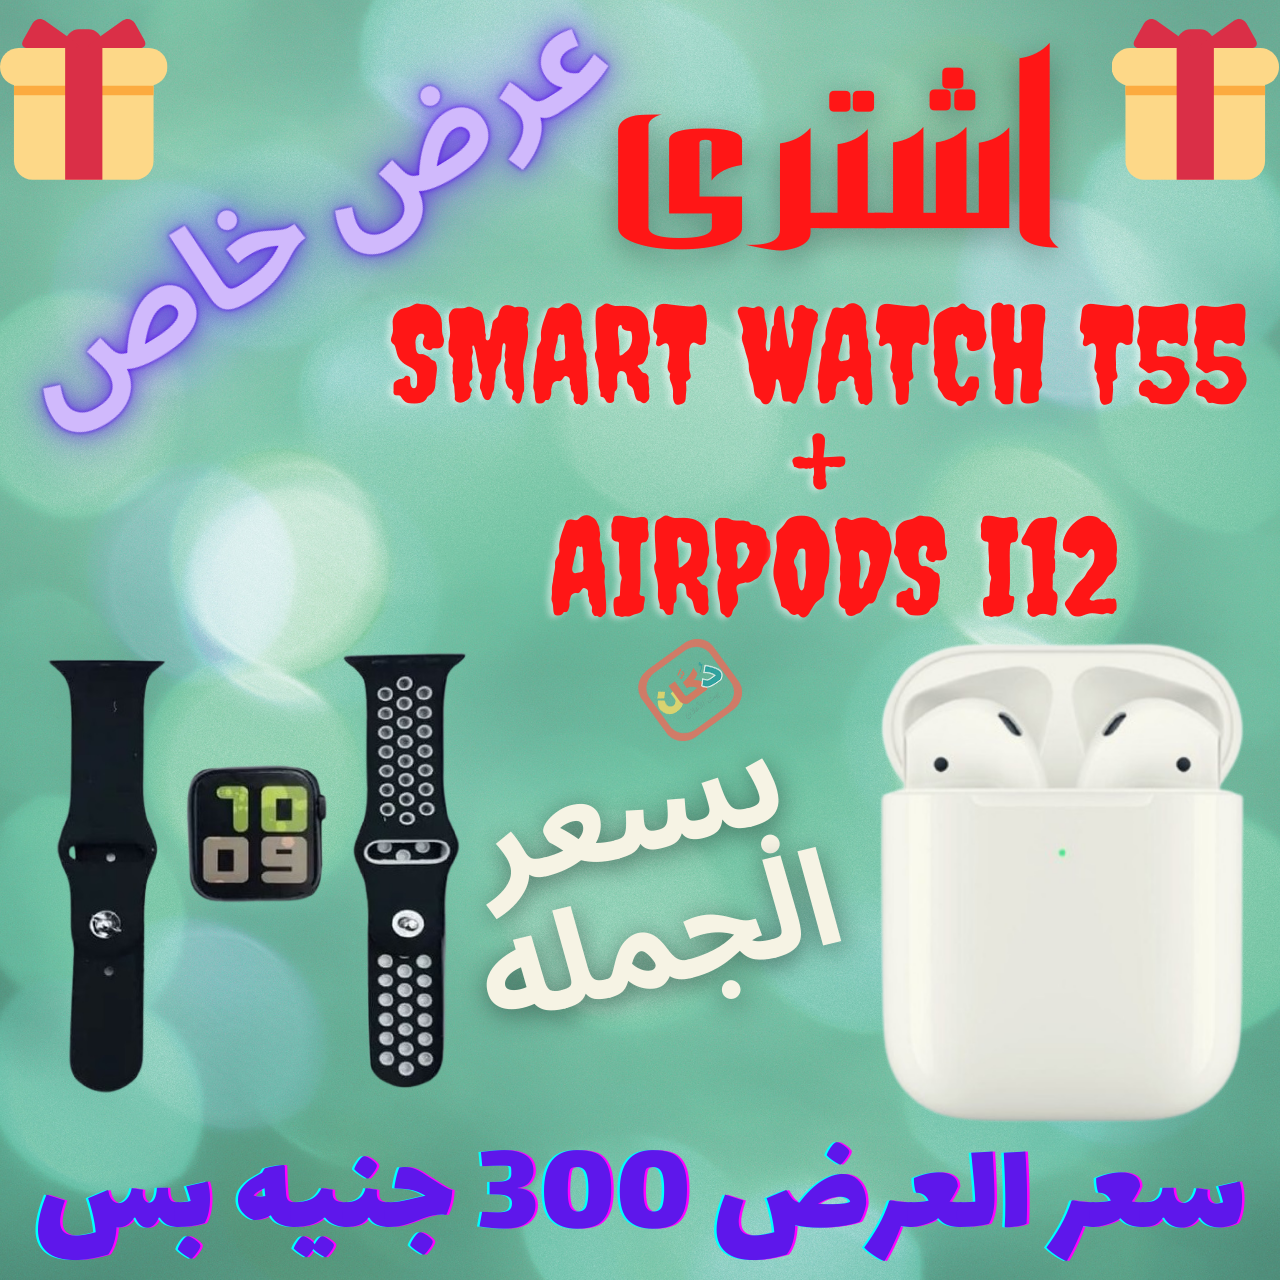 اشترى عرض Smart Watch T55 + Airpods i12 بسعر الجمله